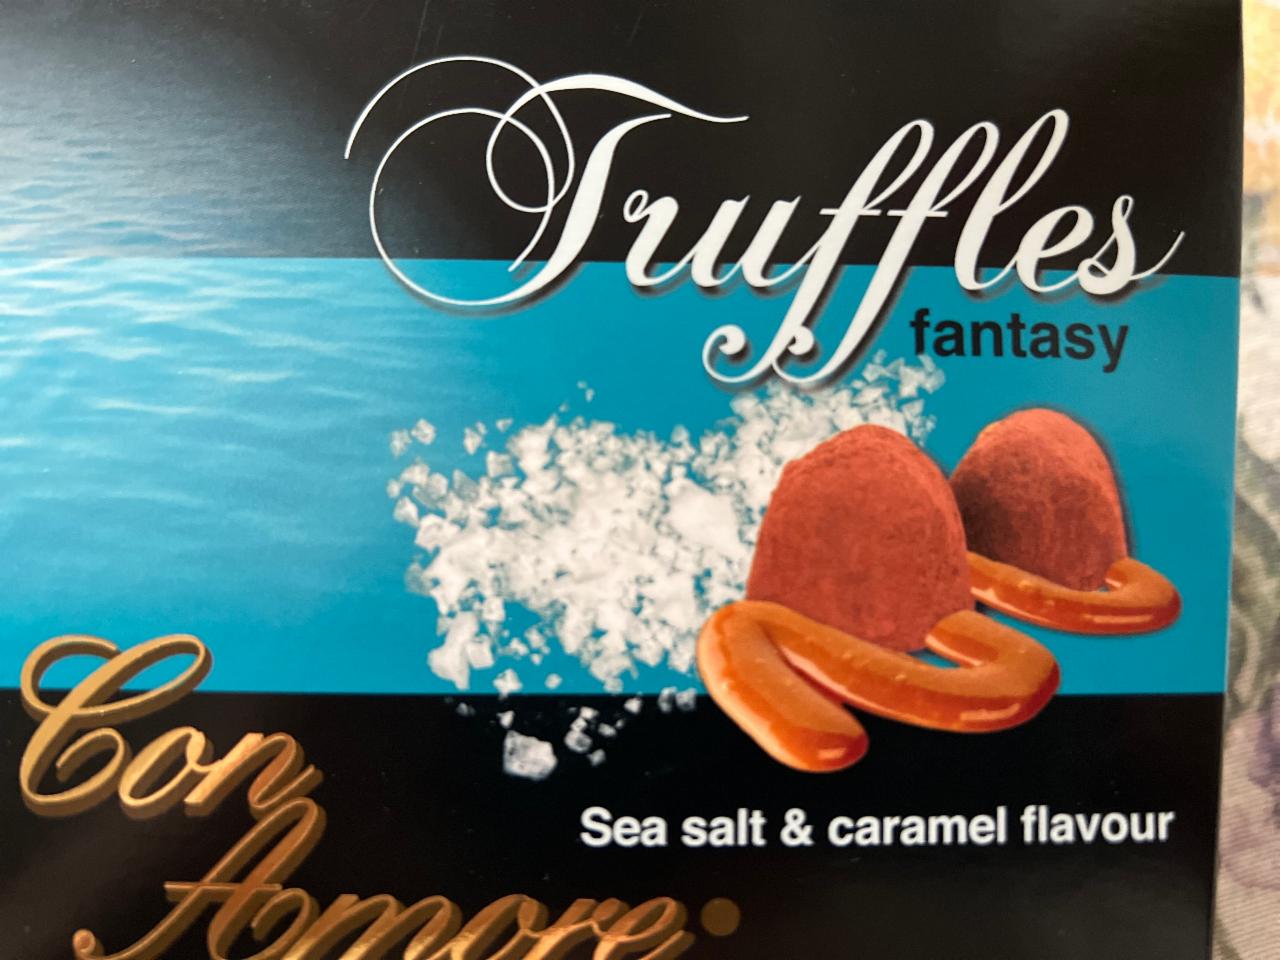 Fotografie - Truffles fantasy Sea & Caramel flavour Con Amore